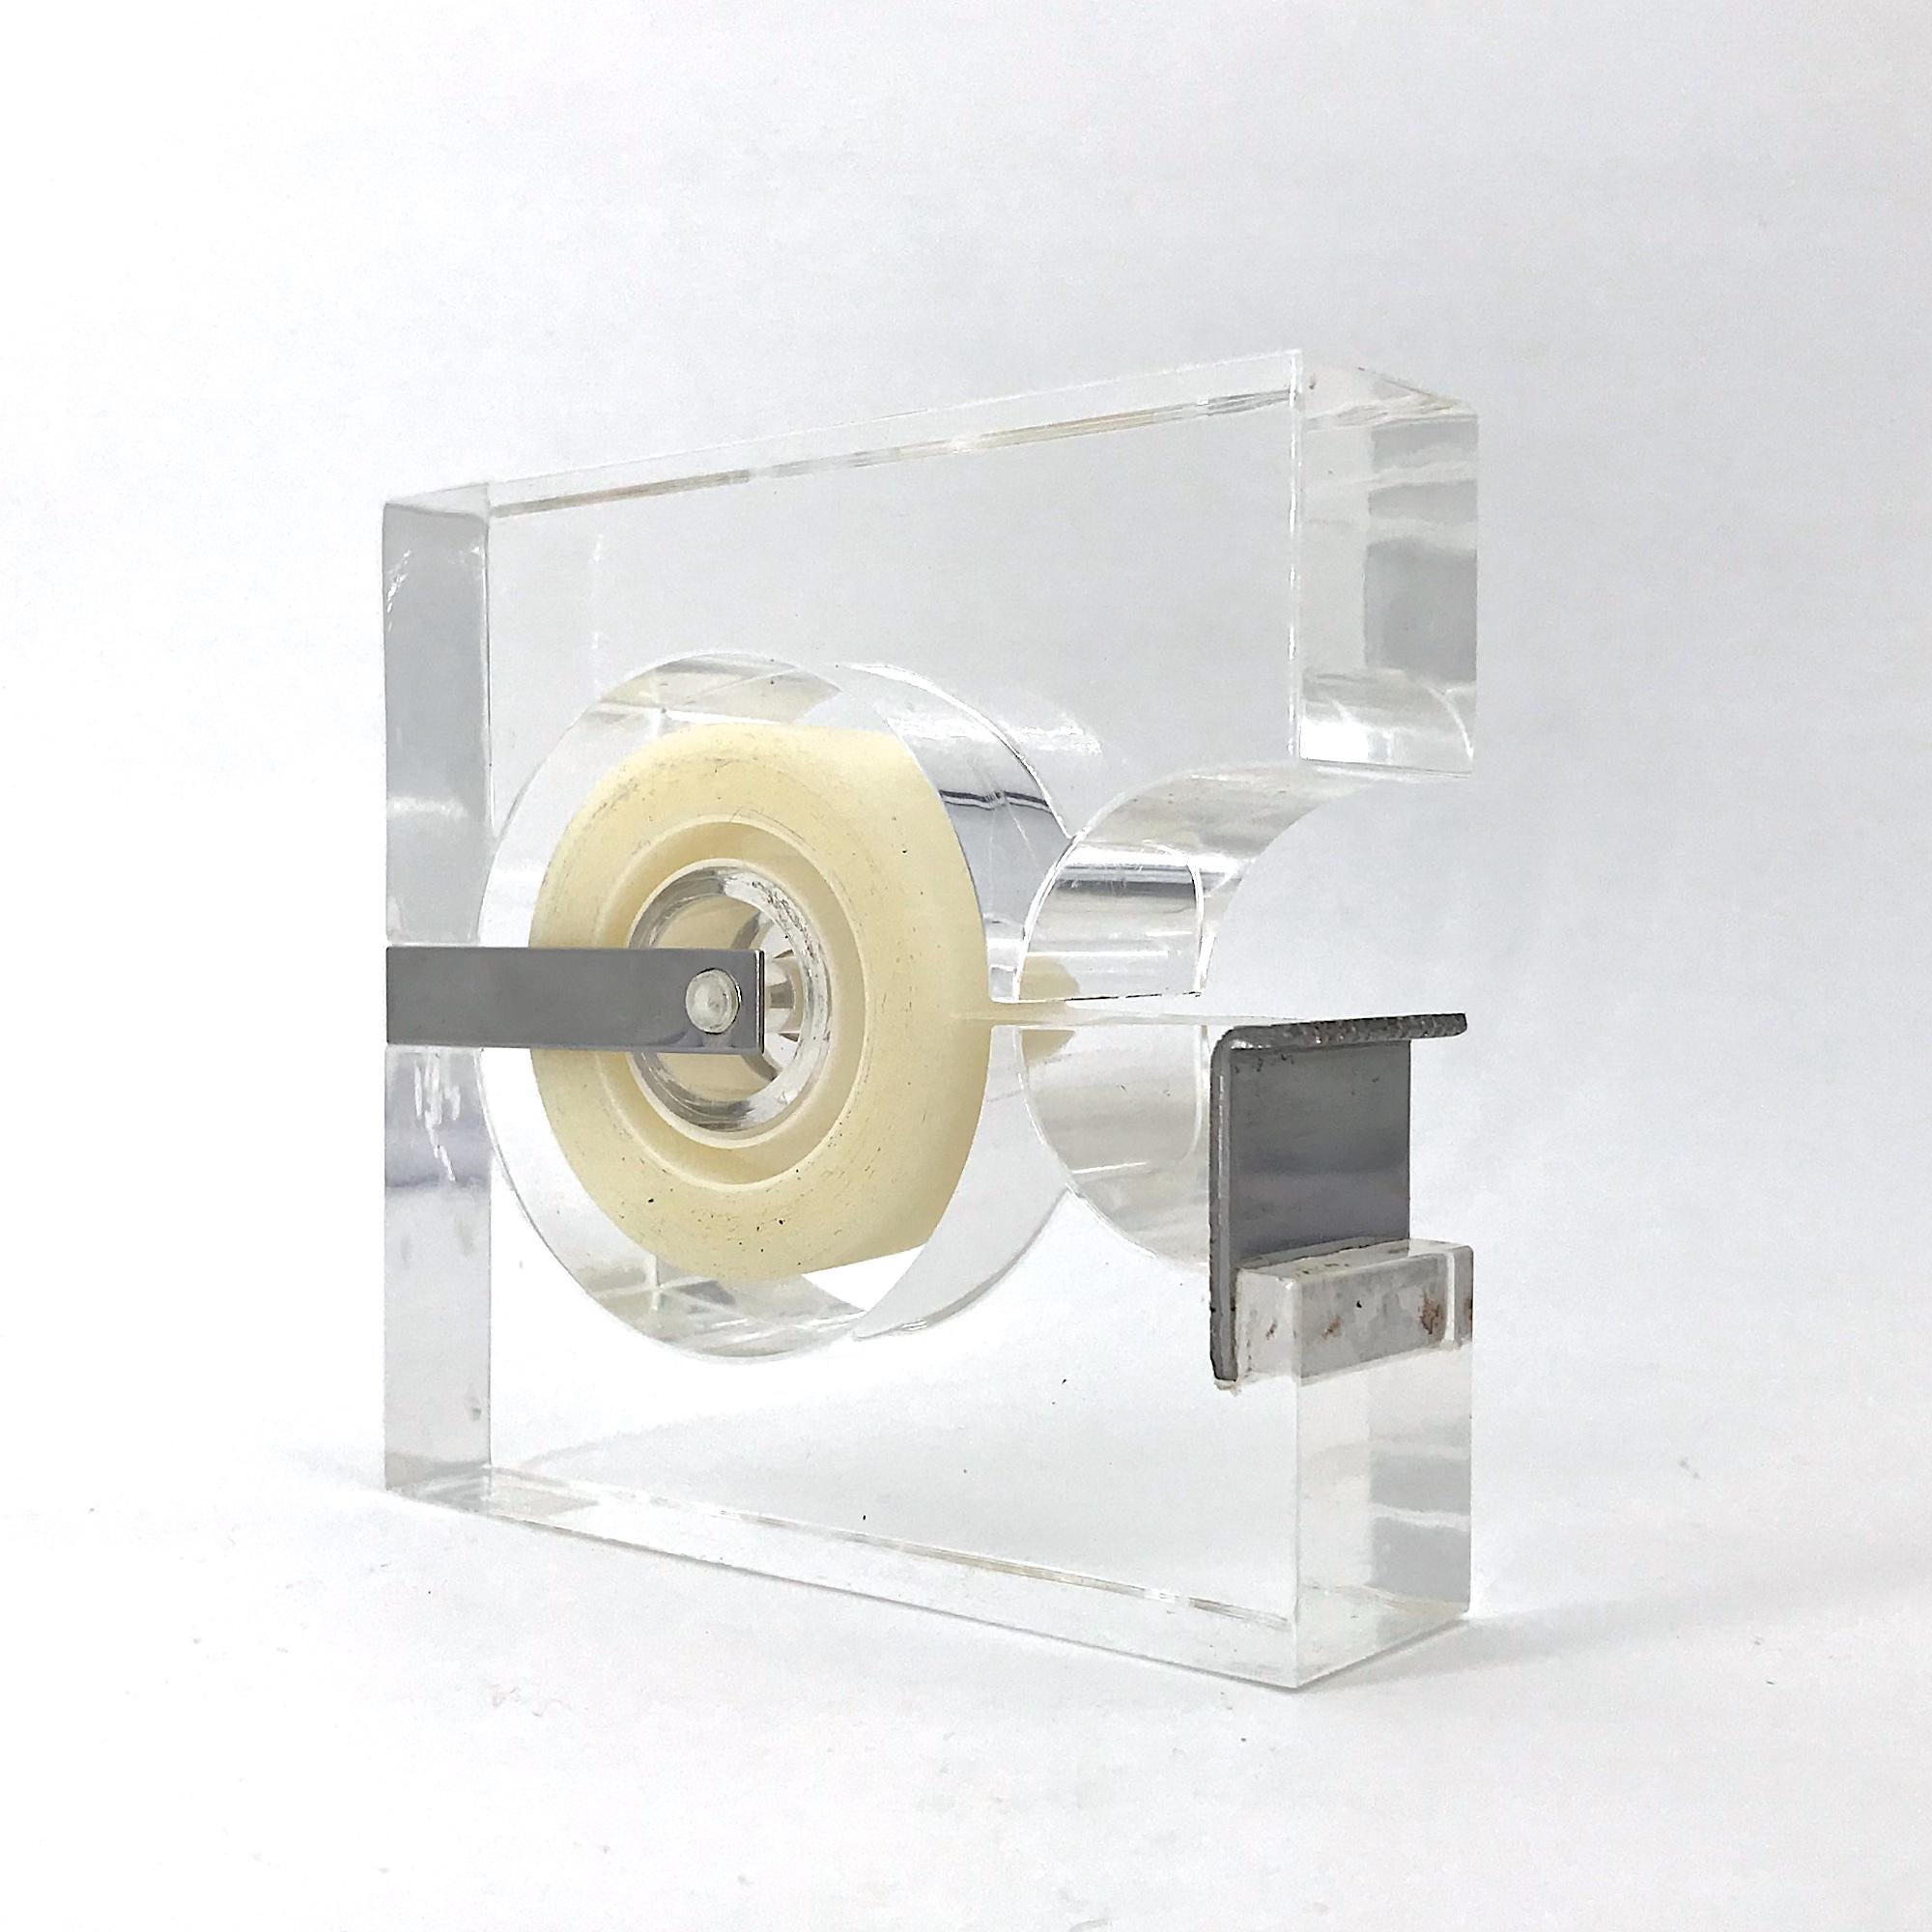 Minimalist 1970s Lucite Tape Dispenser by Two's Company for Serge Mansau Paris MOMA Design